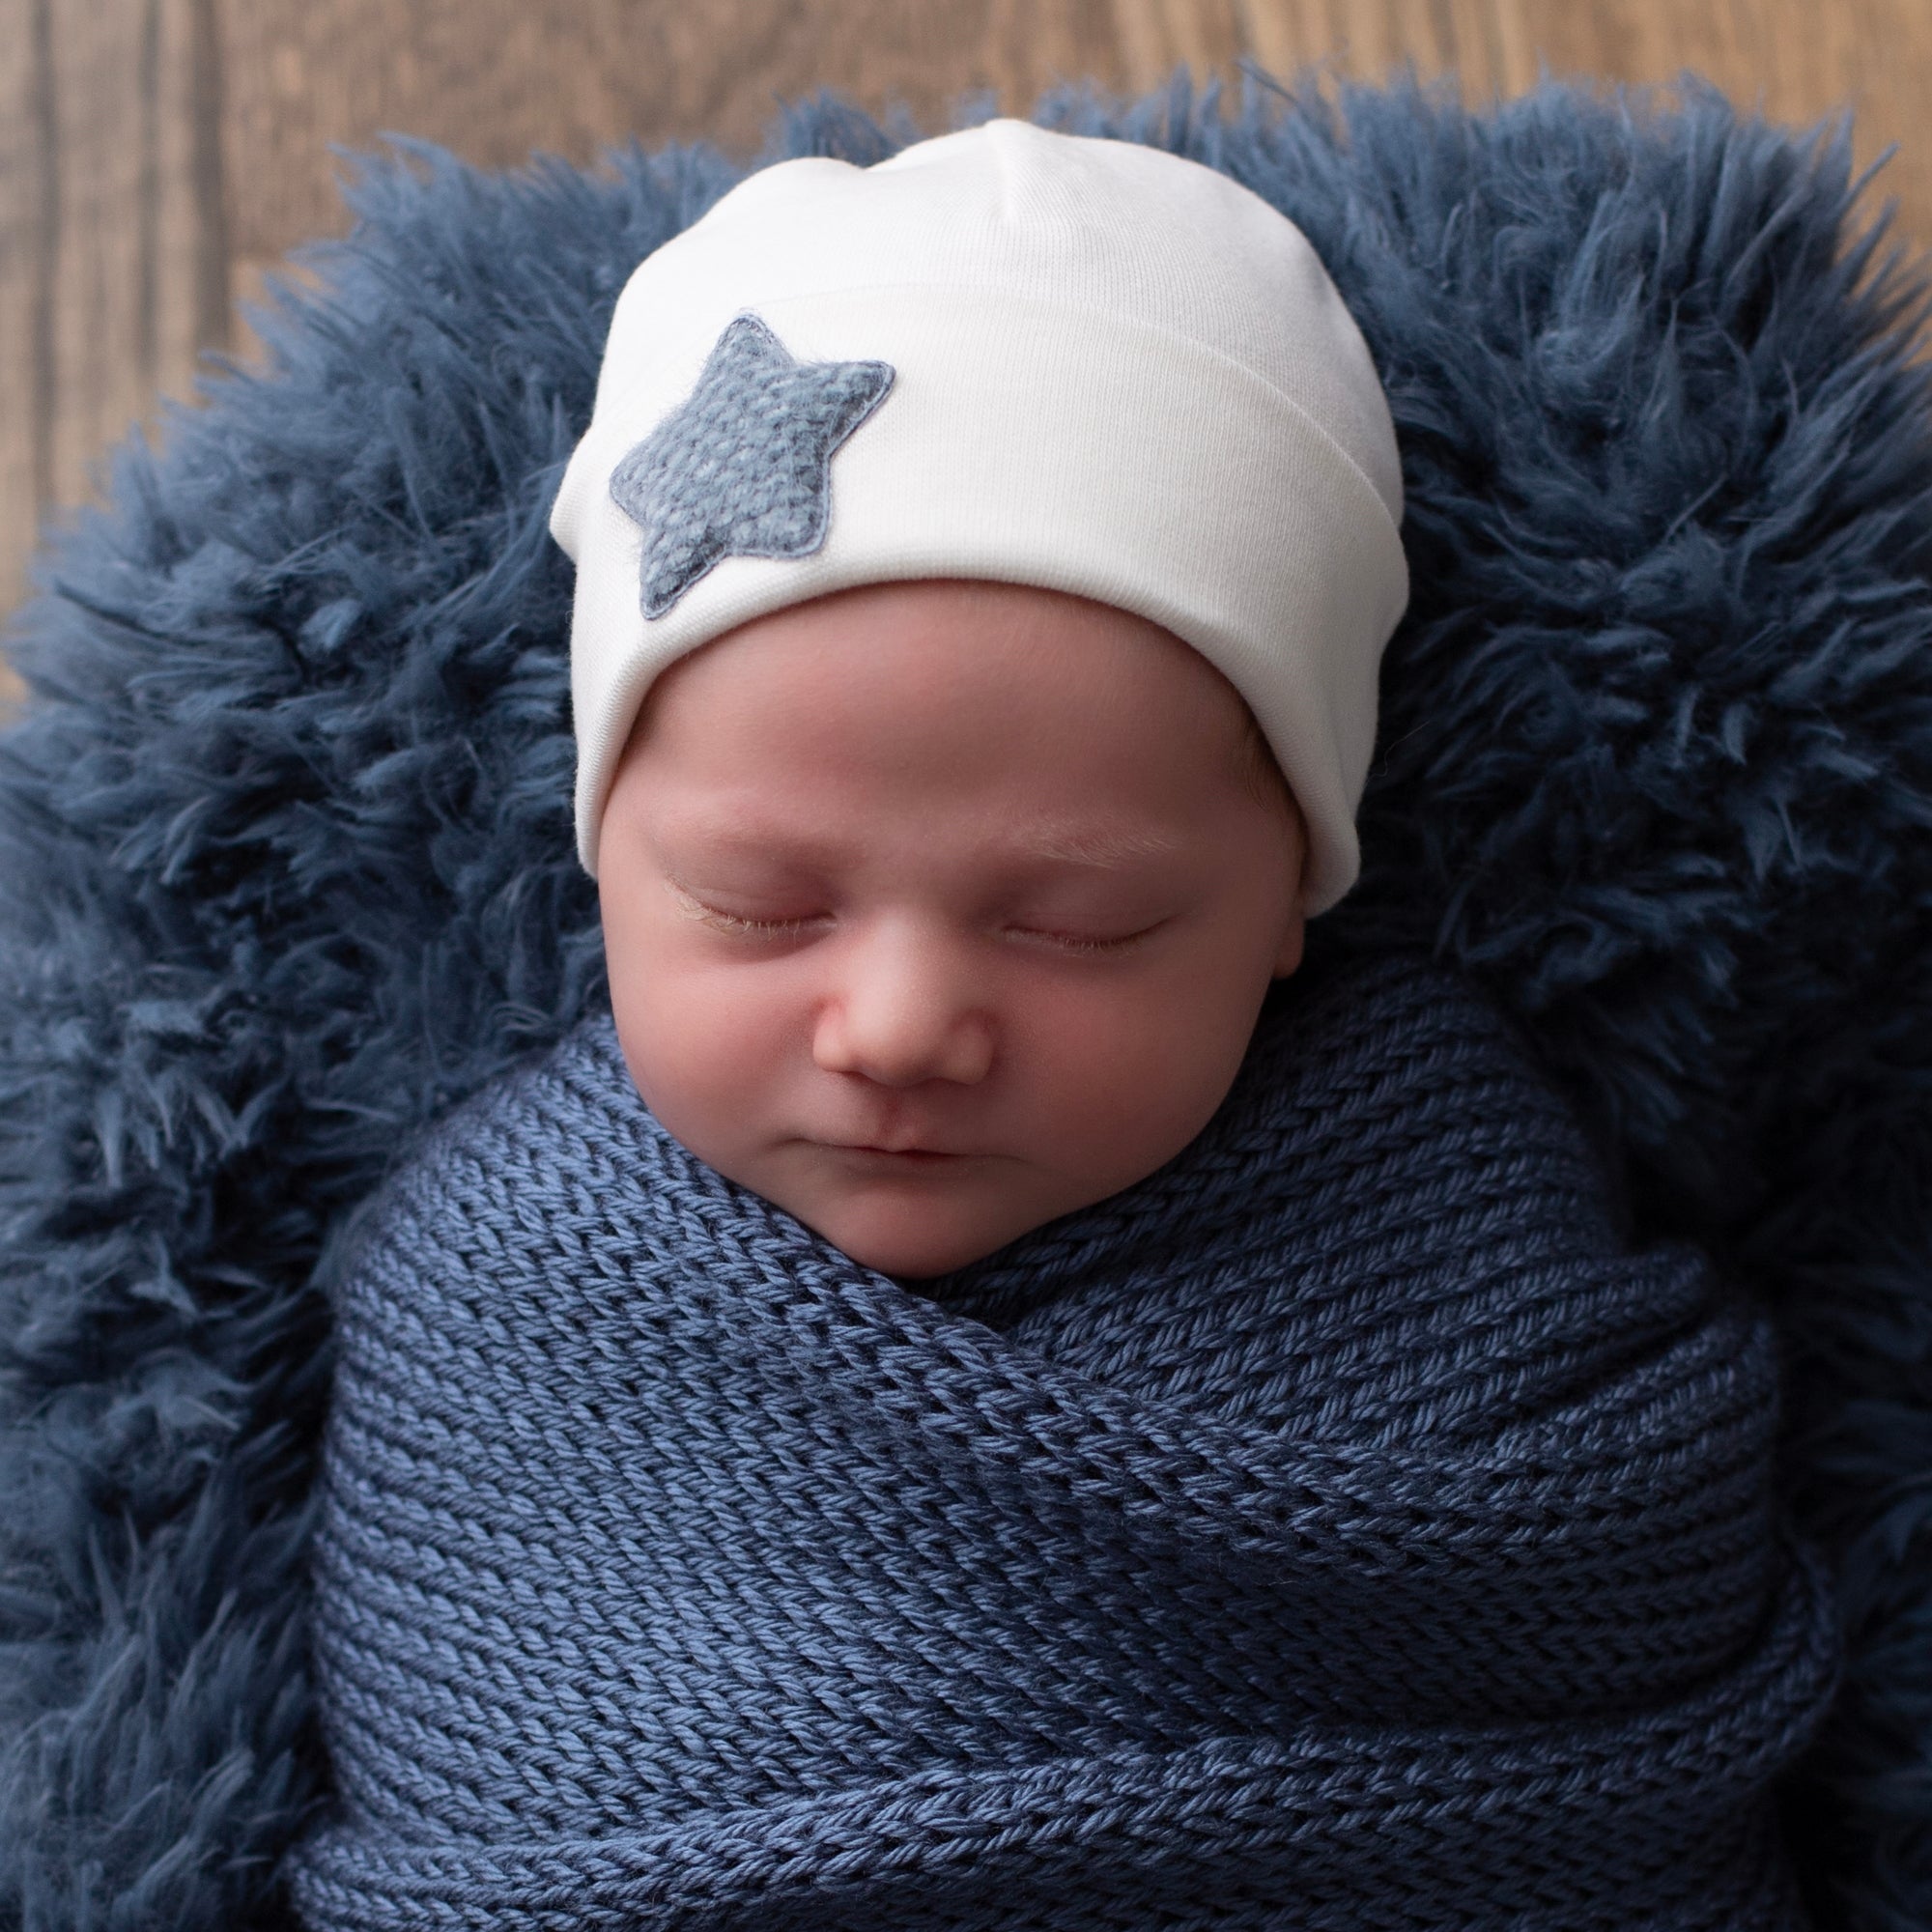 'Little Star' Baby Hat // Blue